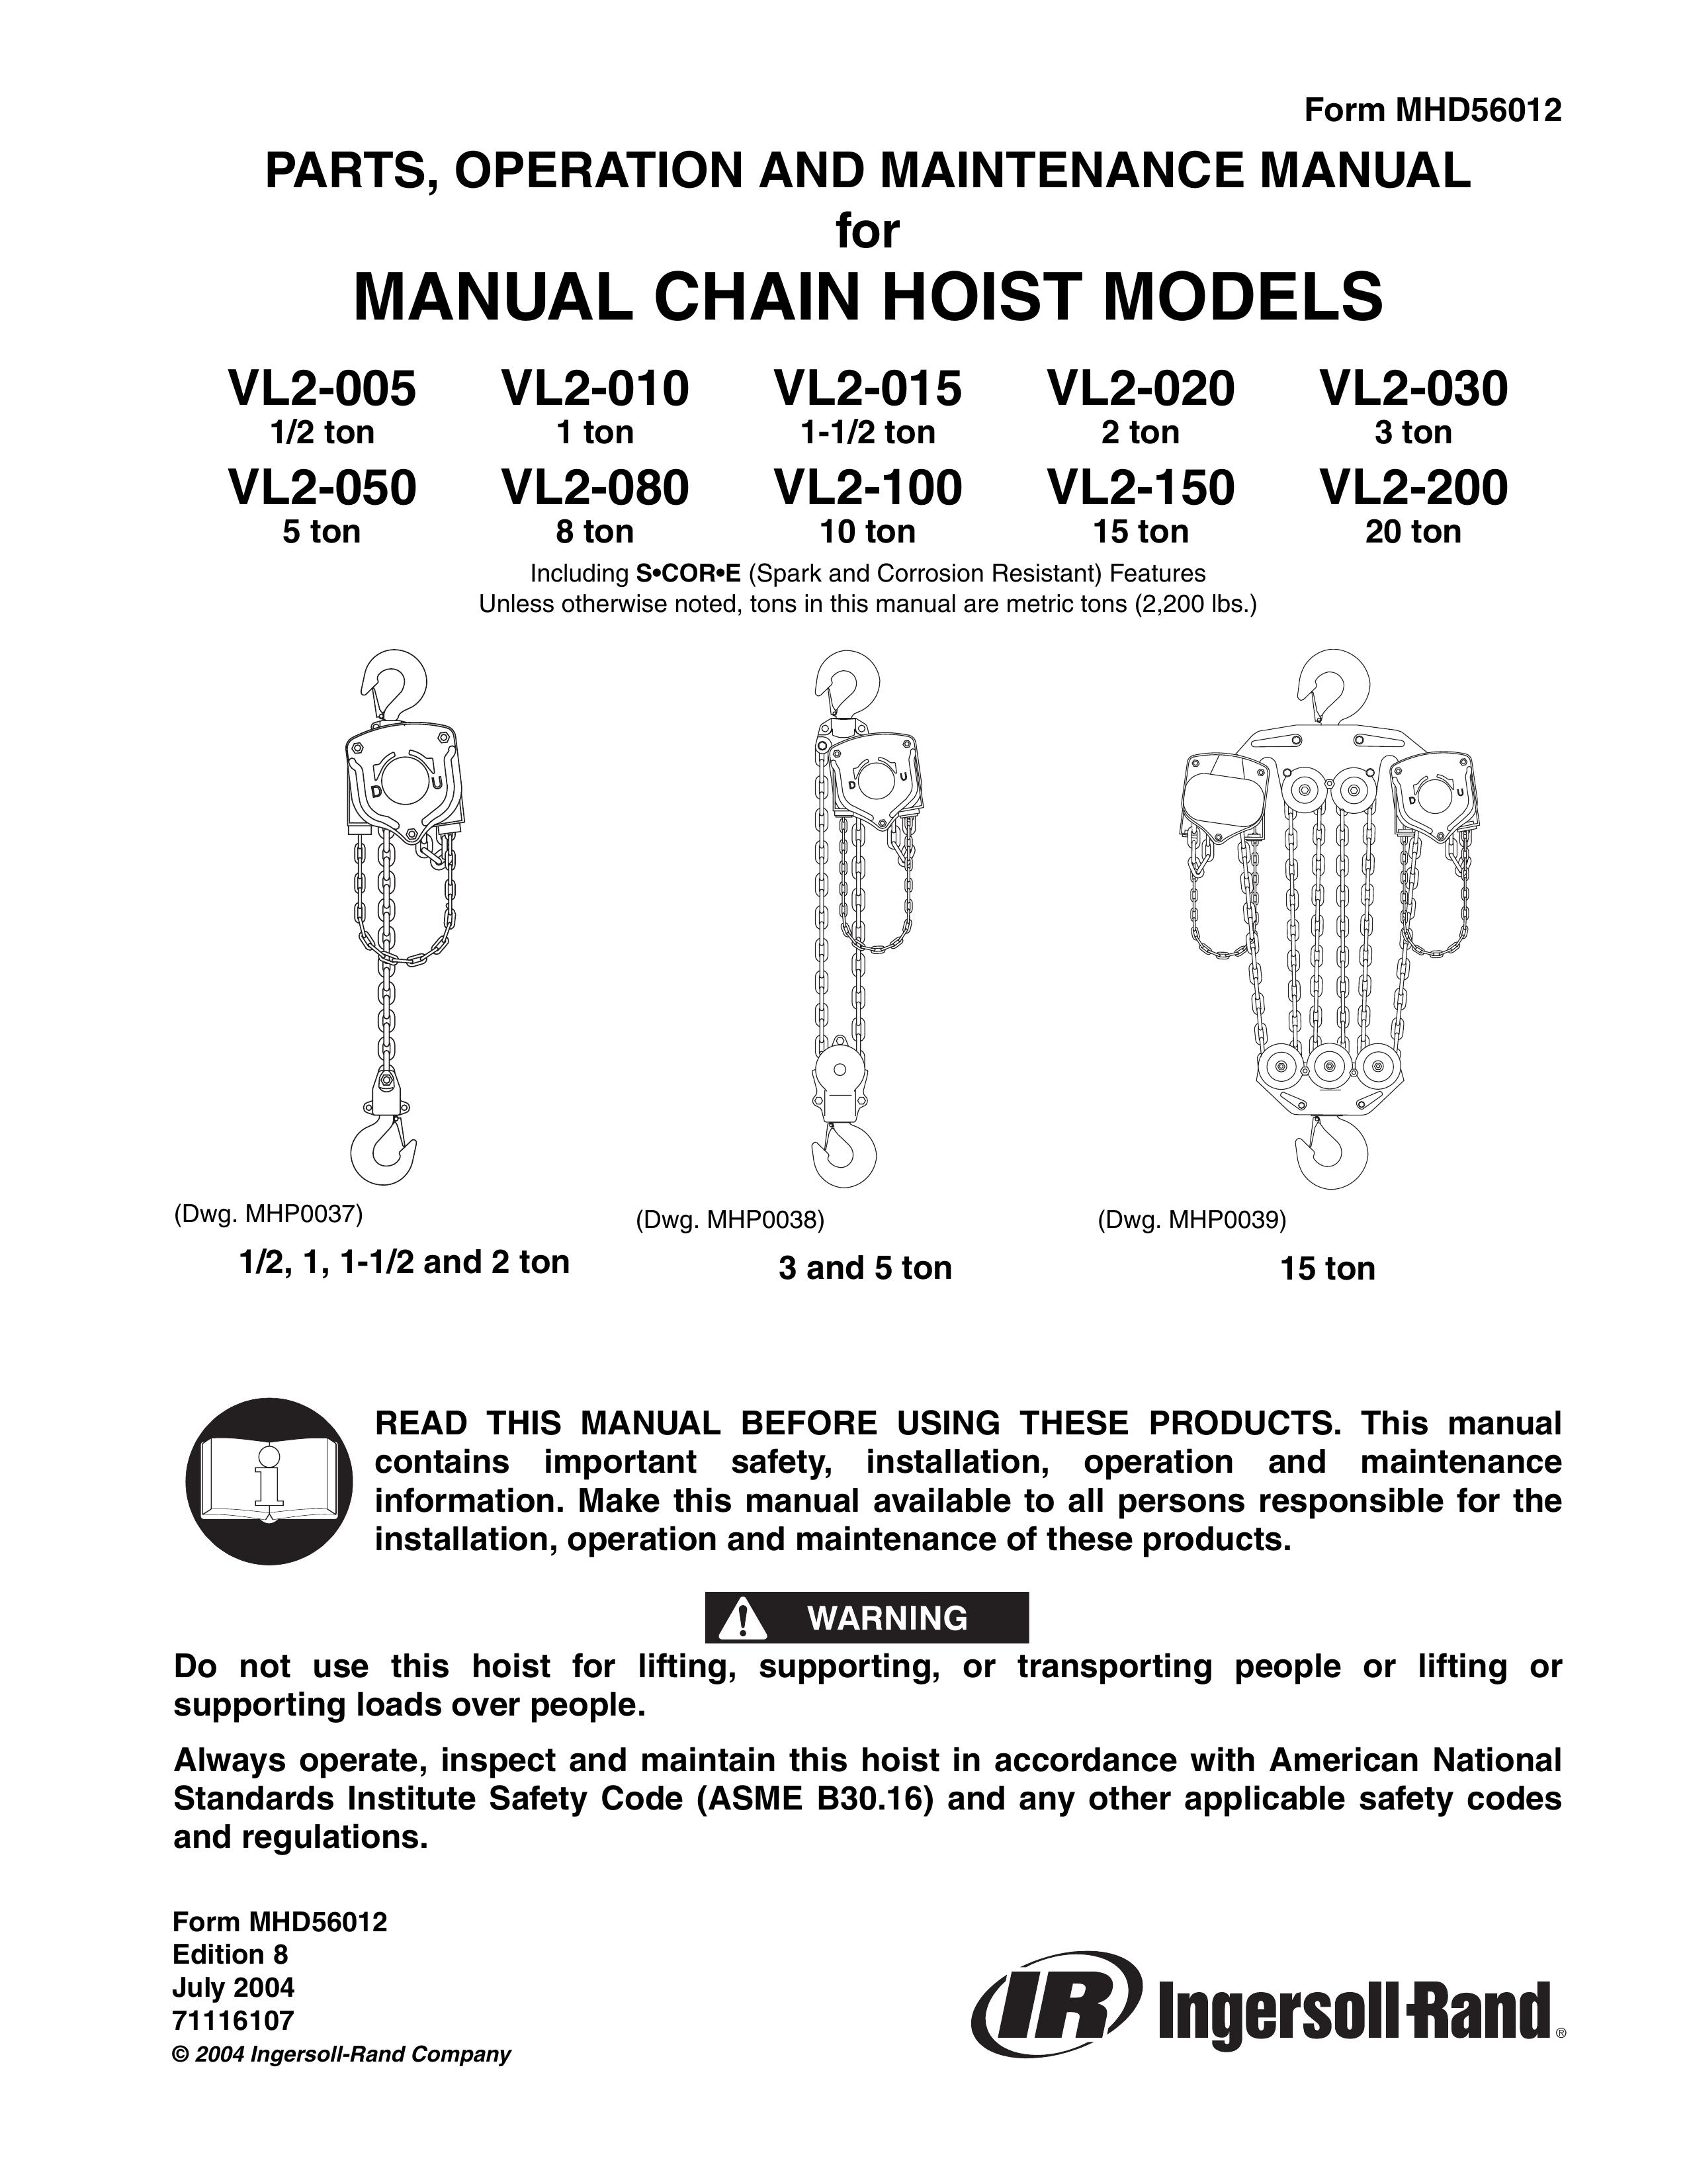 Ingersoll-Rand VL2-150 Digital Photo Keychain User Manual